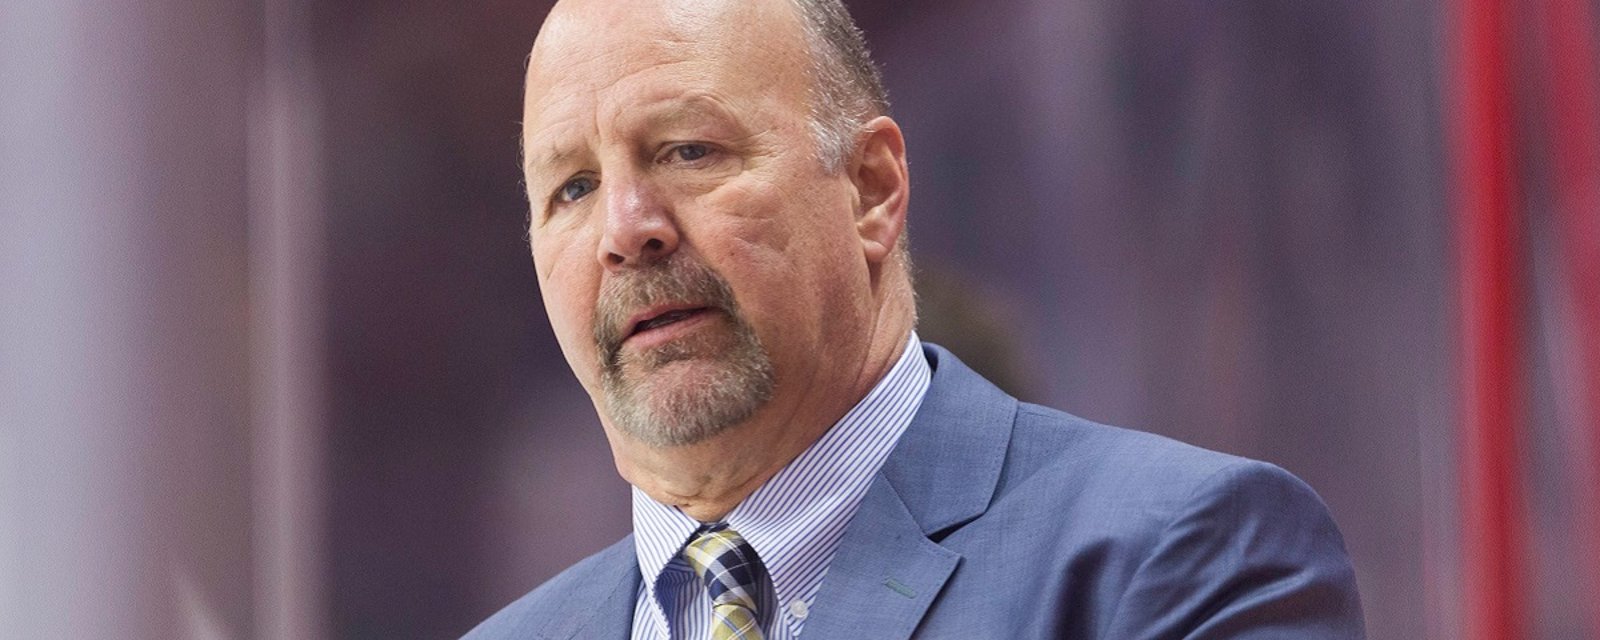 NHL head coach calls out his team for brutal preseason performance.